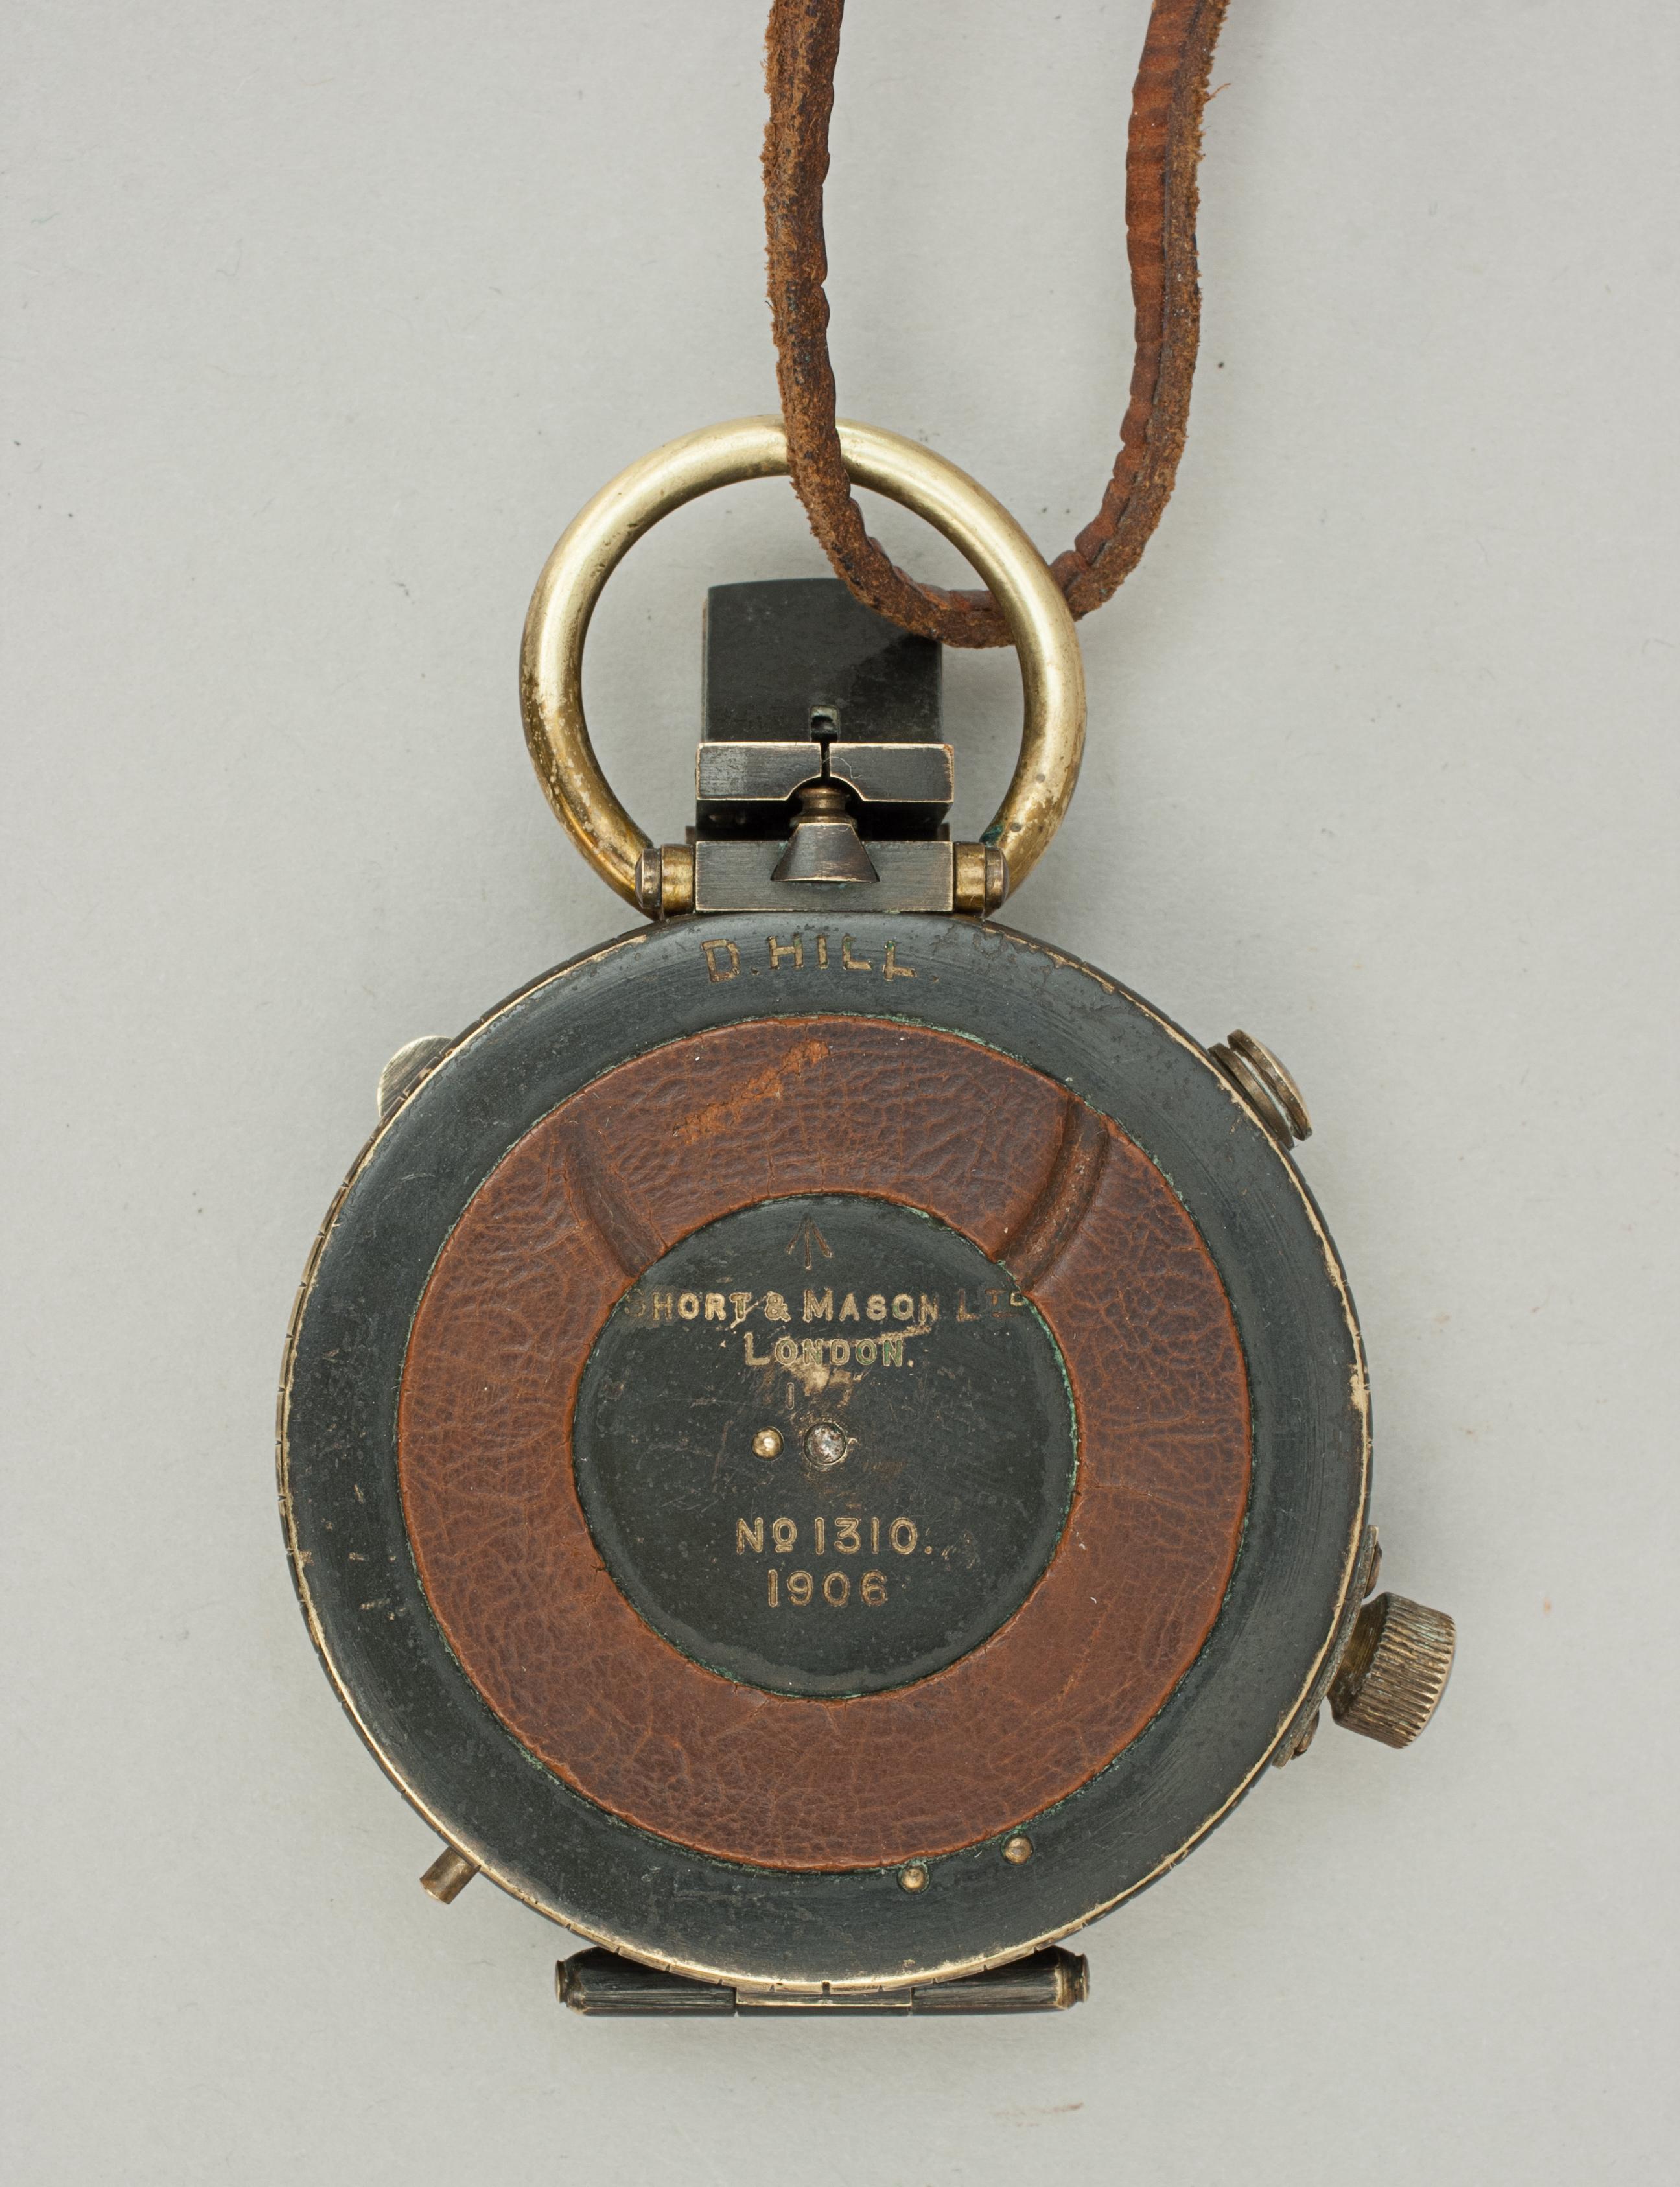 Early 20th Century Military, Short & Mason Ltd. Prismatic Mk. V Compass